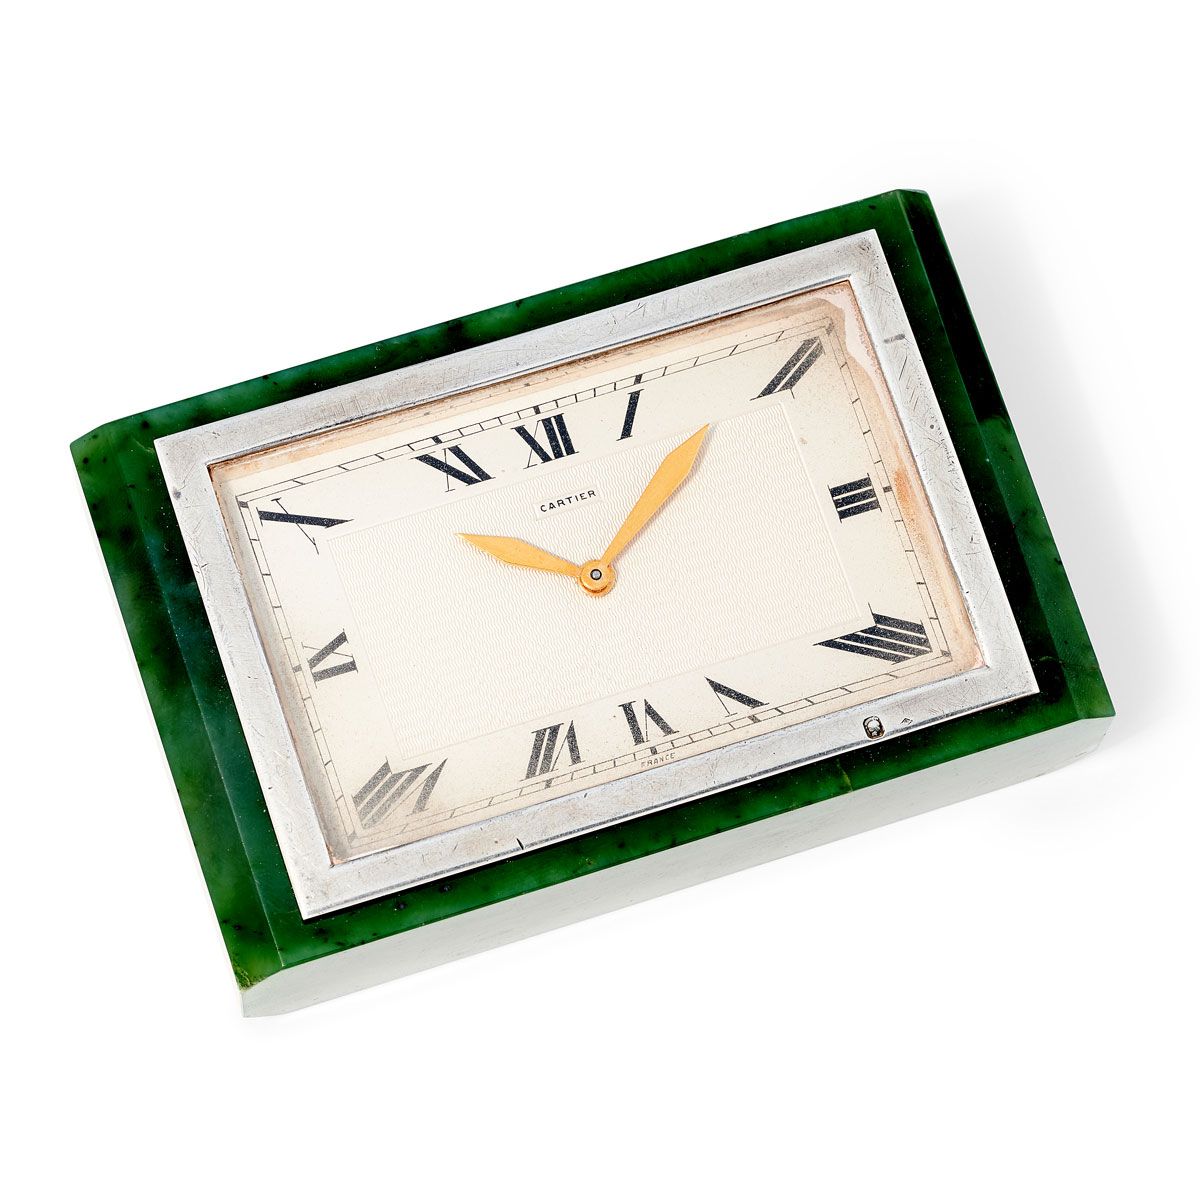 Null Cartier, nº 10238-87, alrededor de 1940.

Reloj de sobremesa Art Decó de pl&hellip;